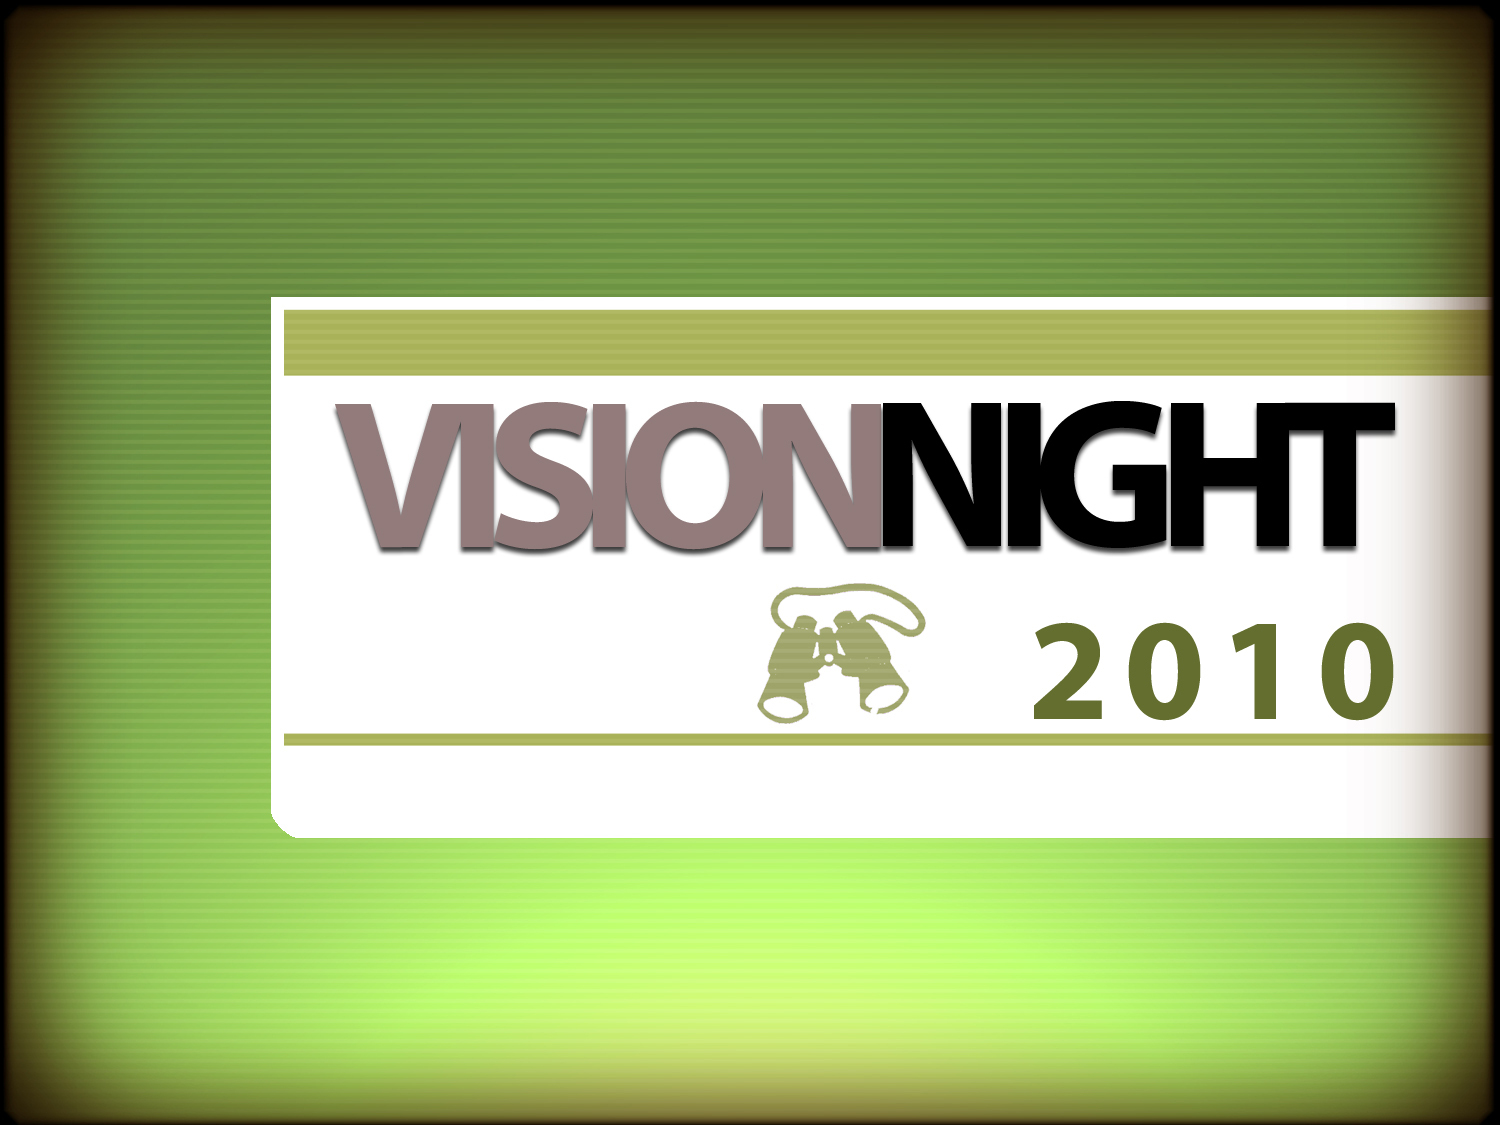 visionnight2010screen.jpg